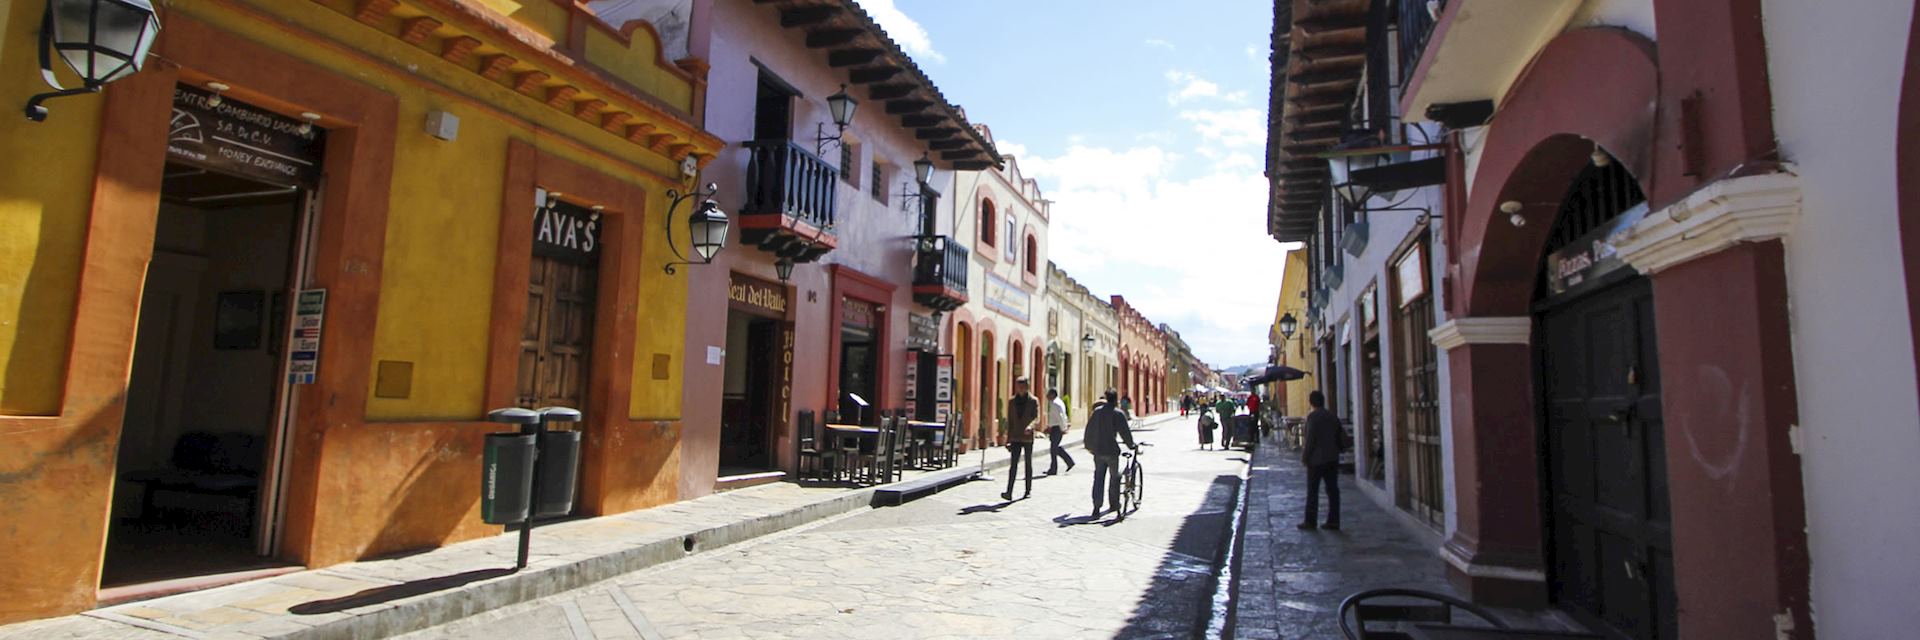 A street in San Cristóbal de las Casas